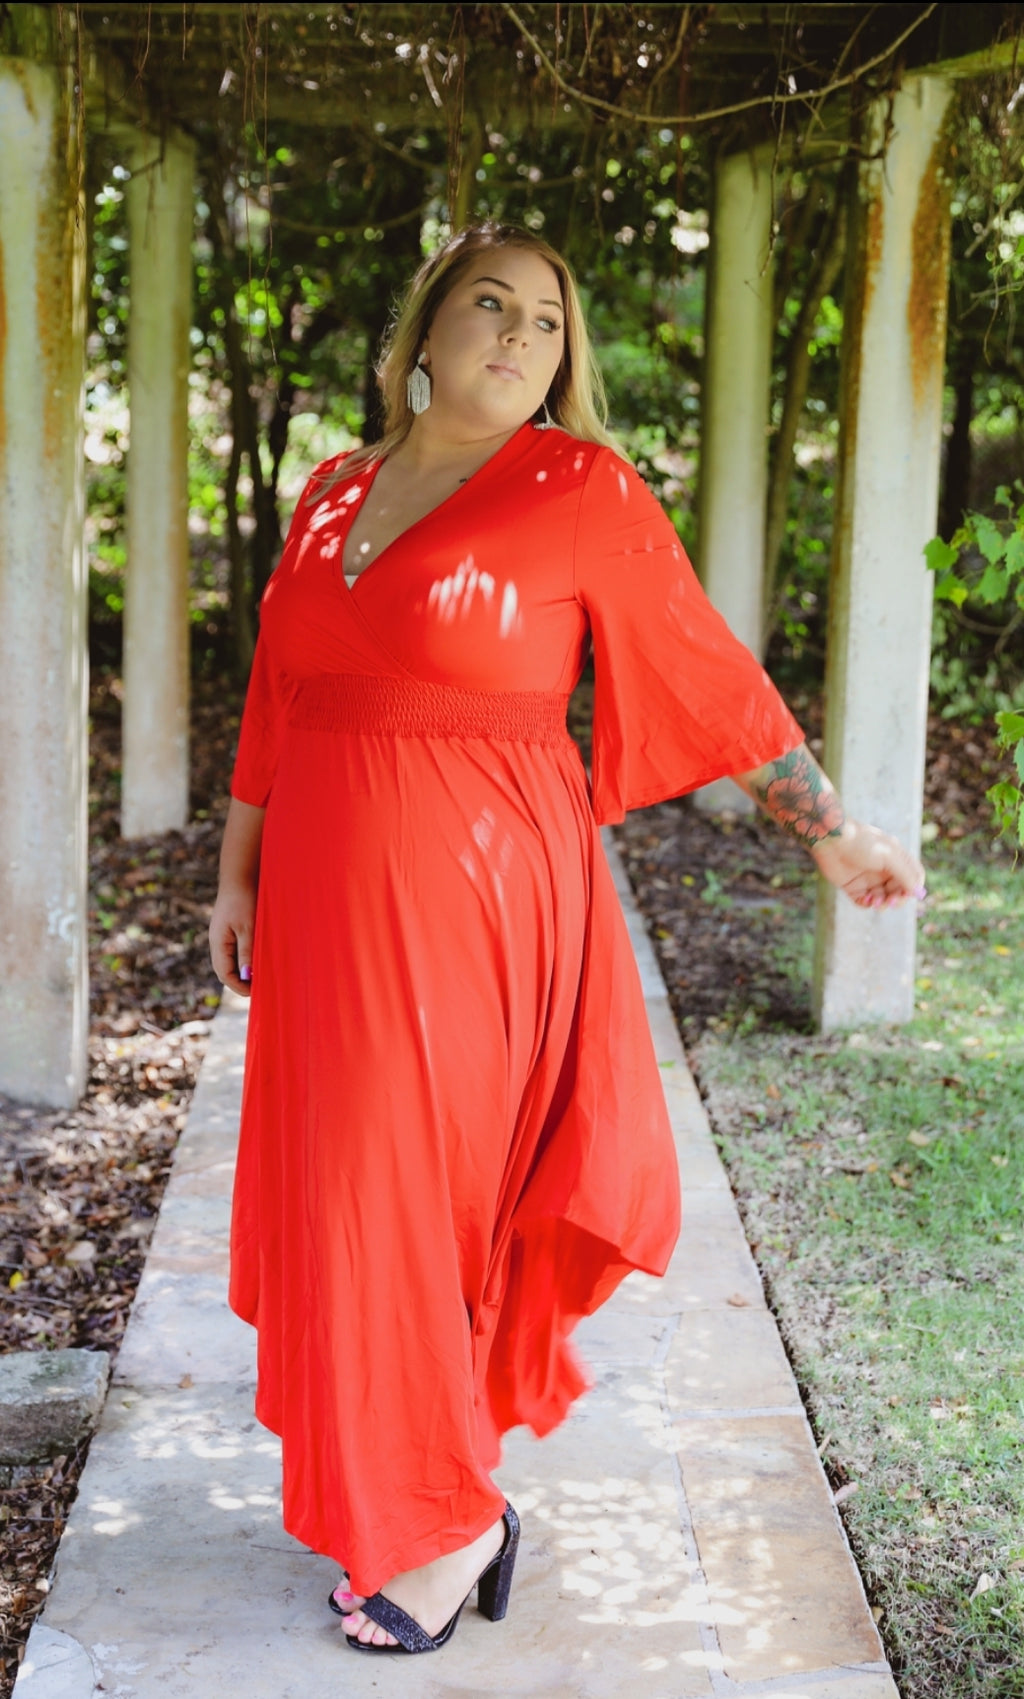 Curvy red dress